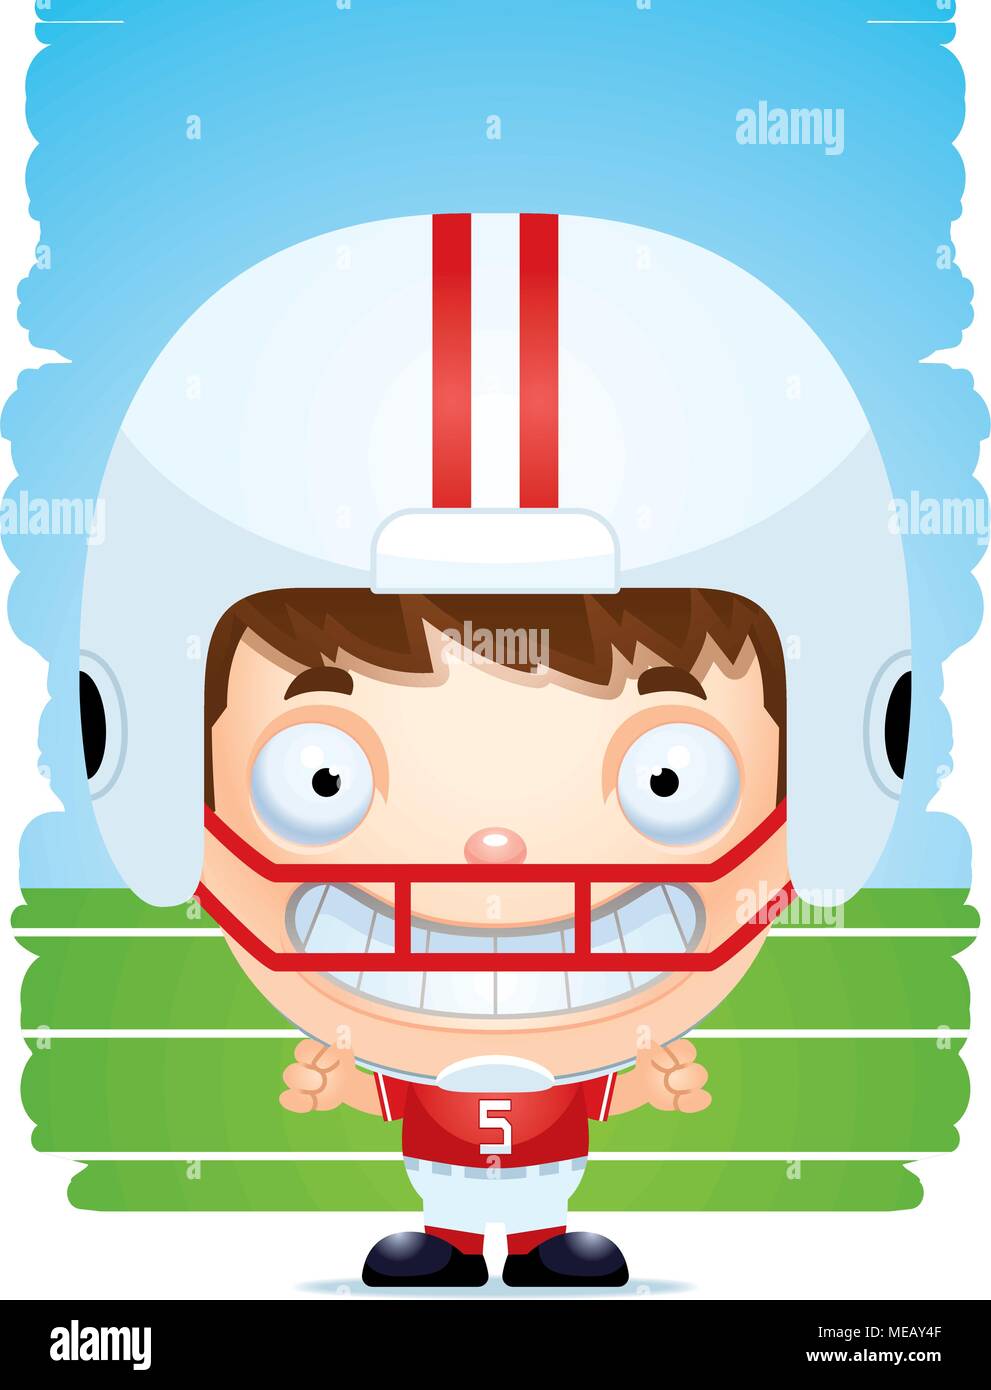 A cartoon illustration of a boy football player smiling. Stock Vector